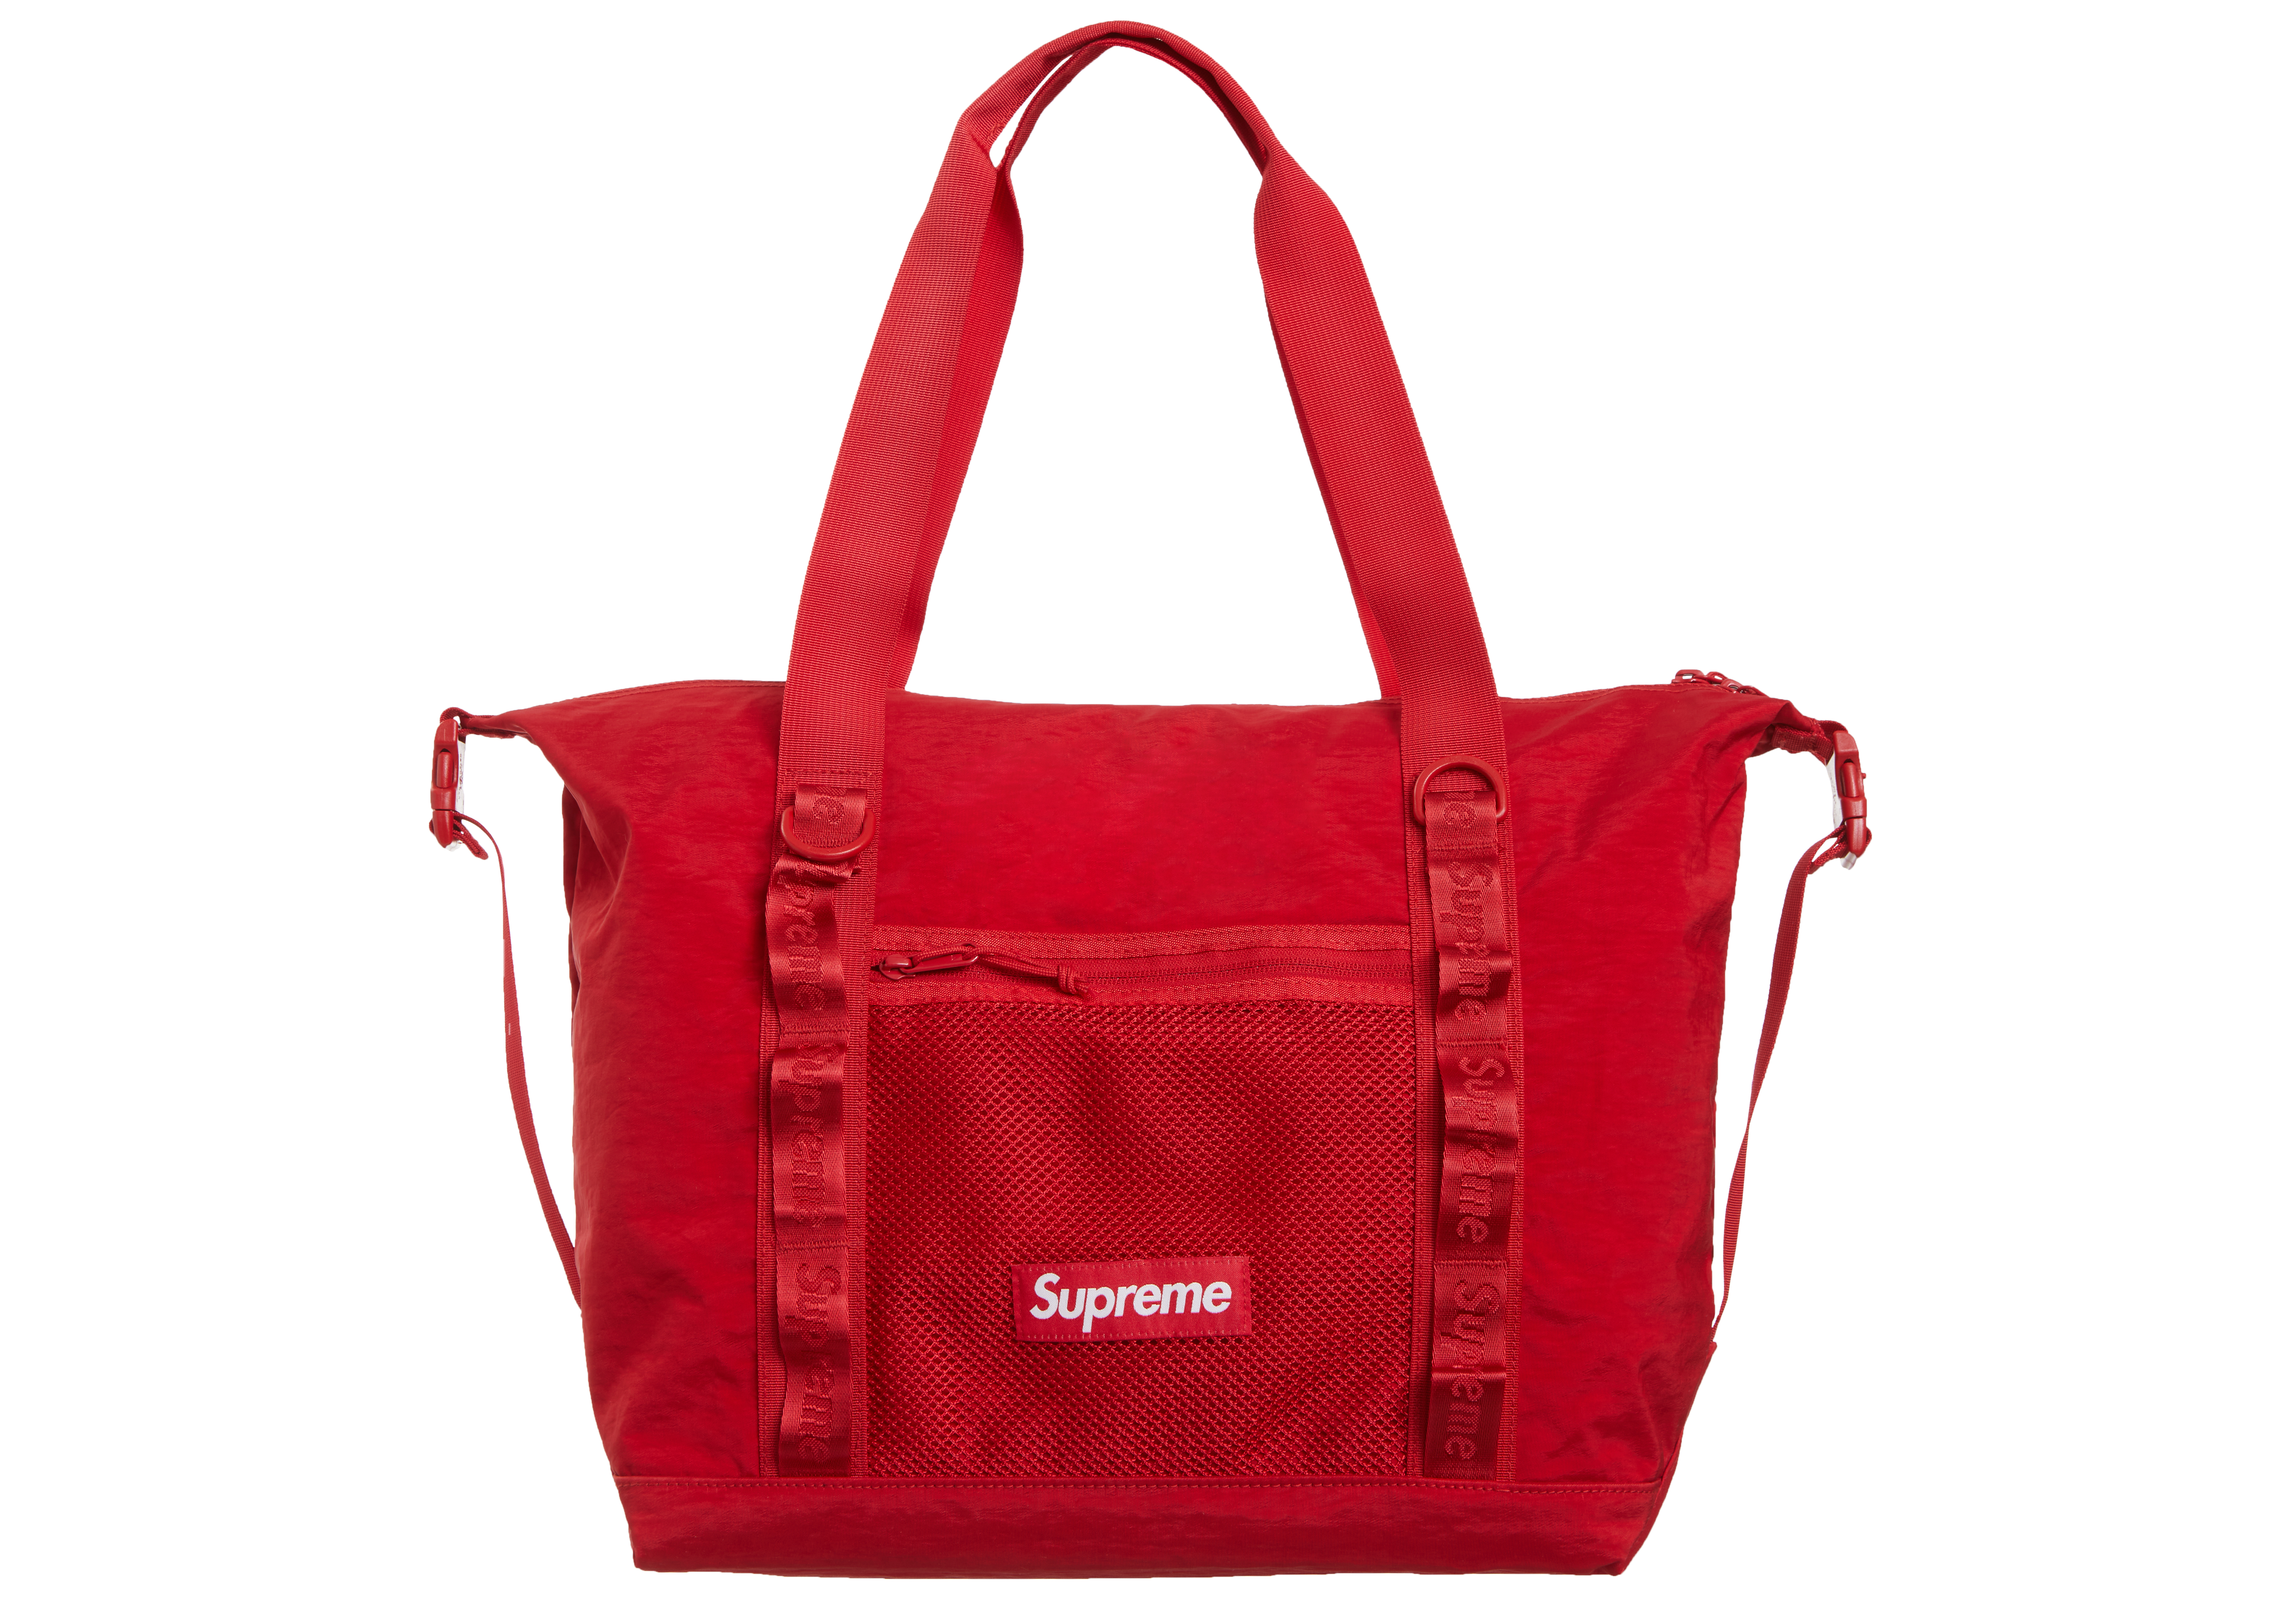 Supreme Tote Bag red